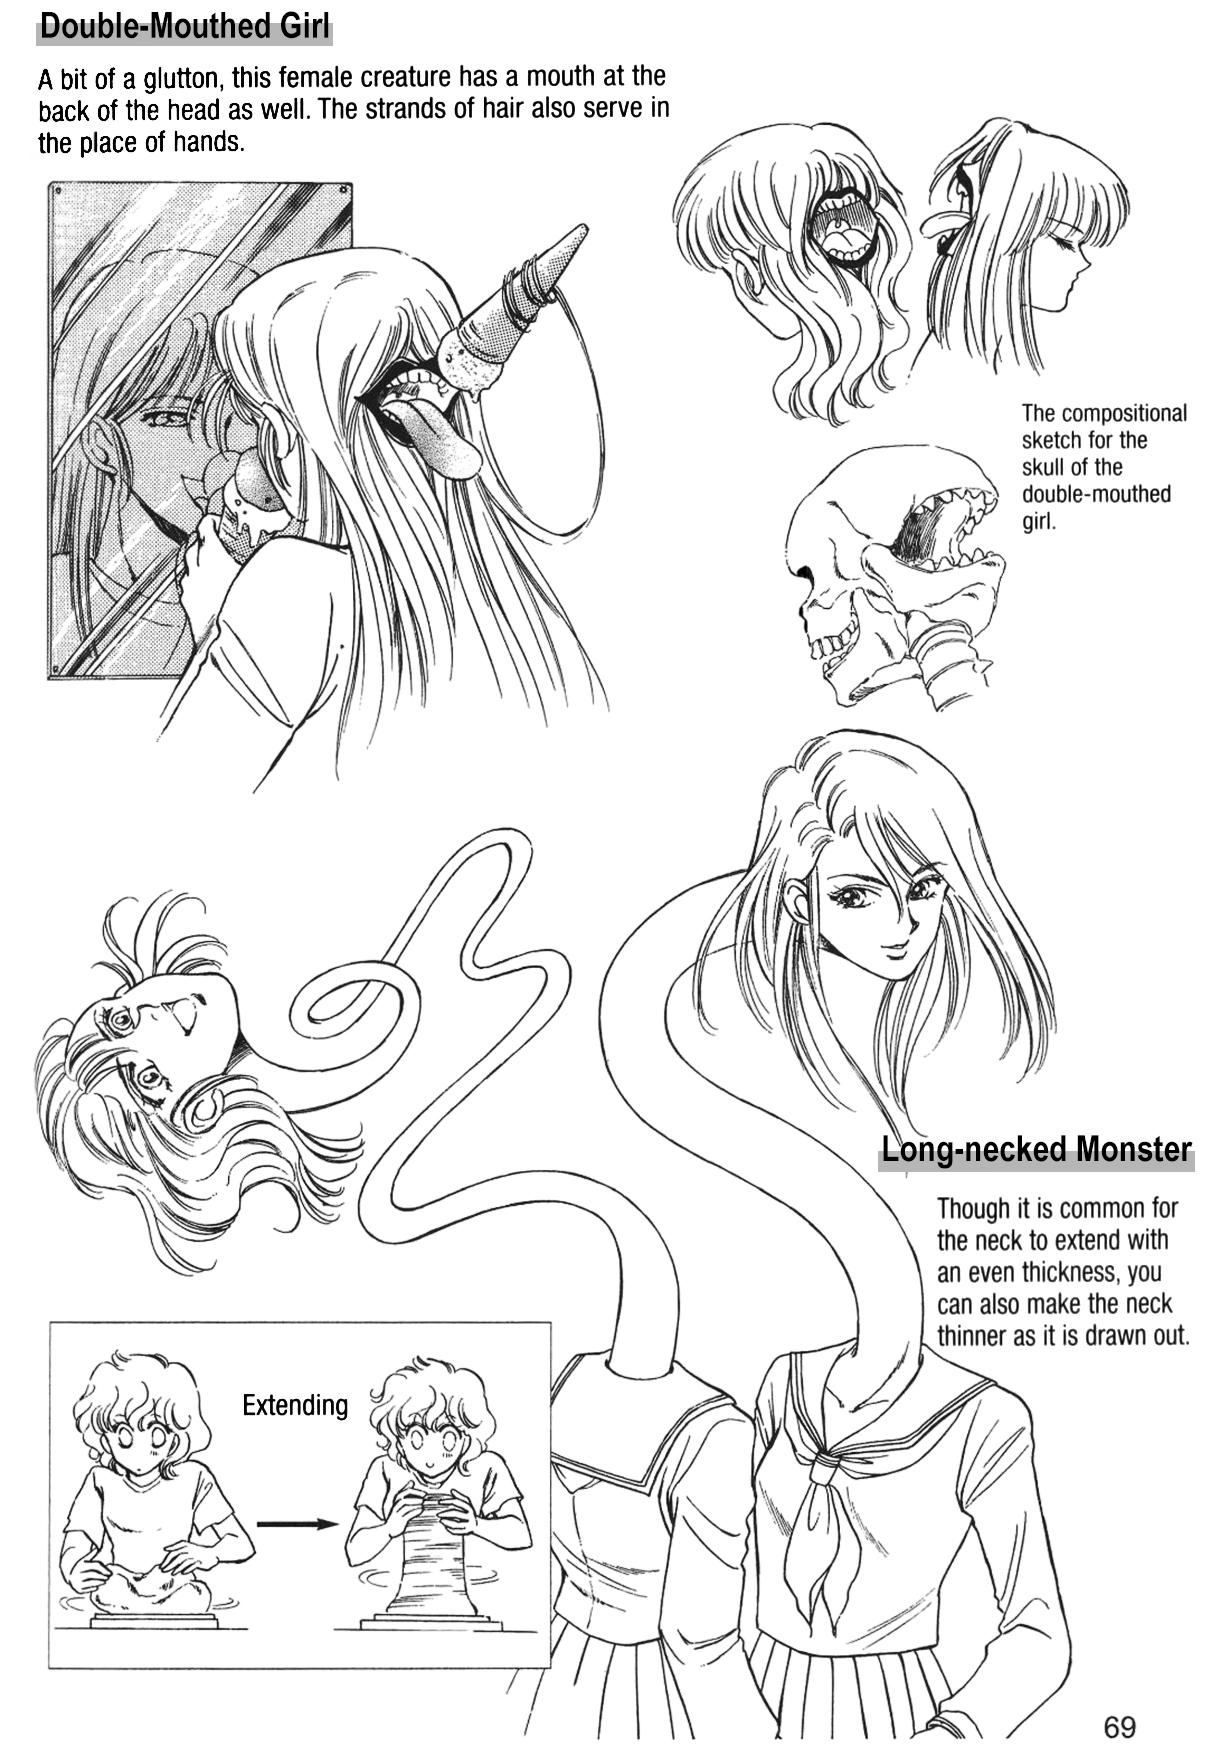 How to Draw Manga Vol. 24, Occult & Horror by Hikaru Hayashi 72